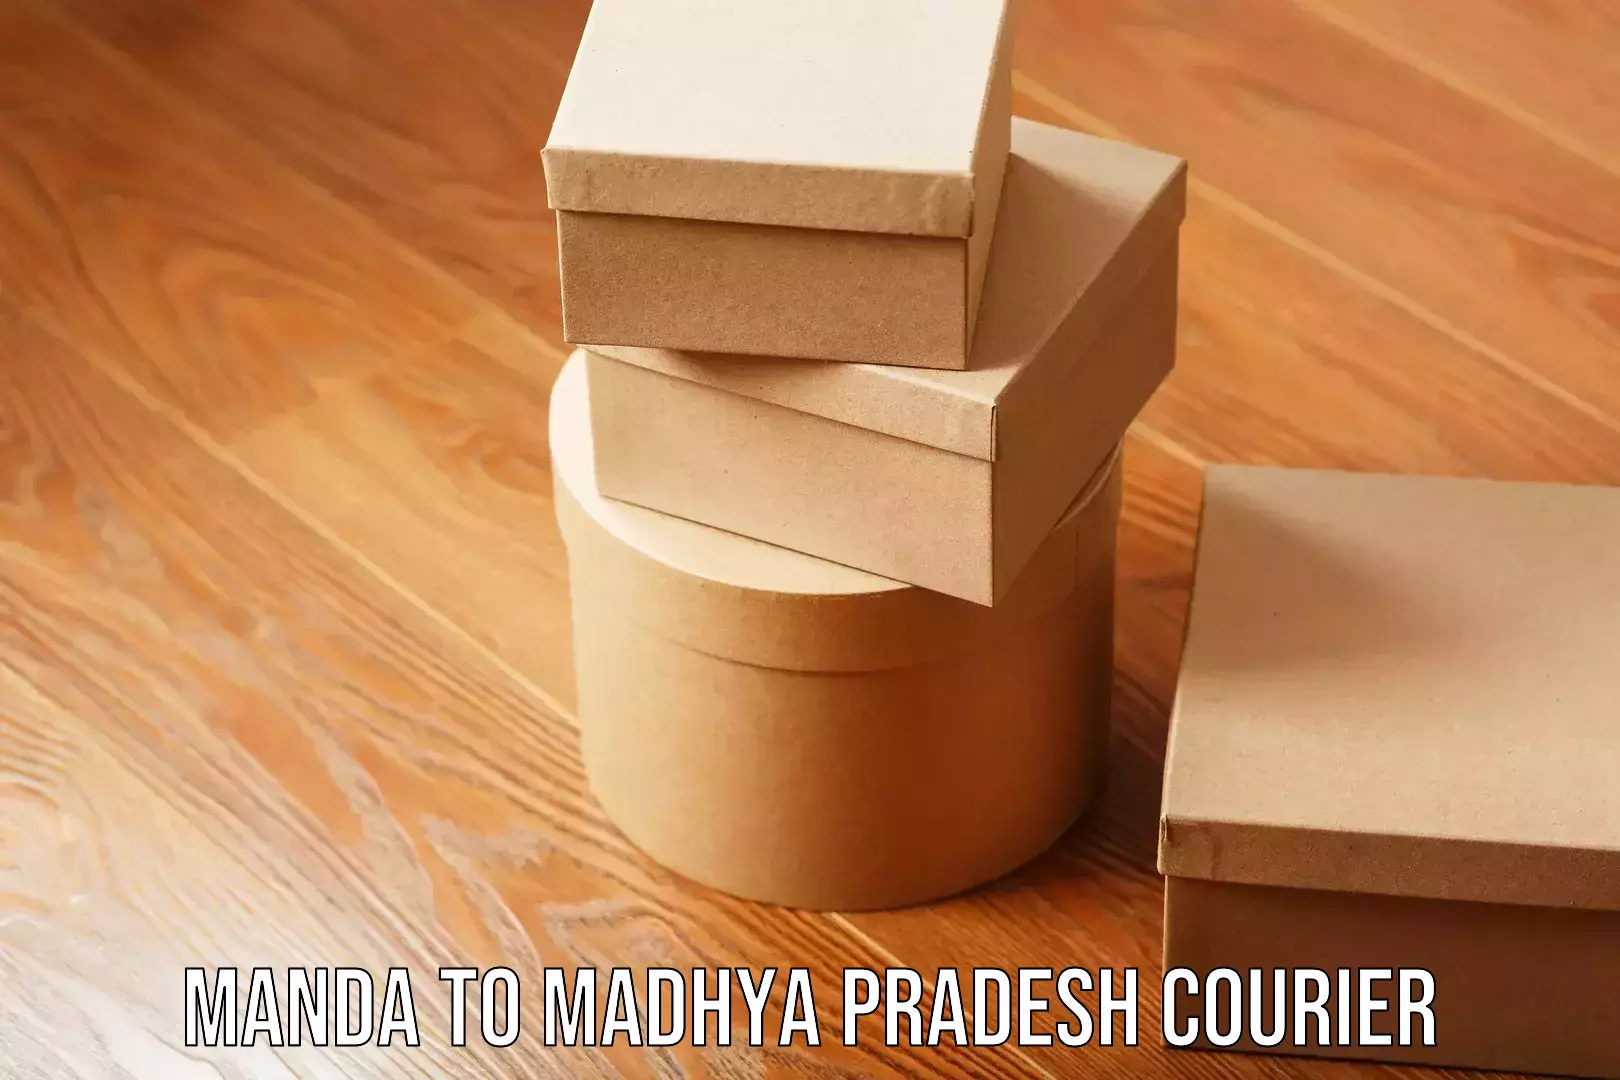 Efficient moving company Manda to Madhya Pradesh